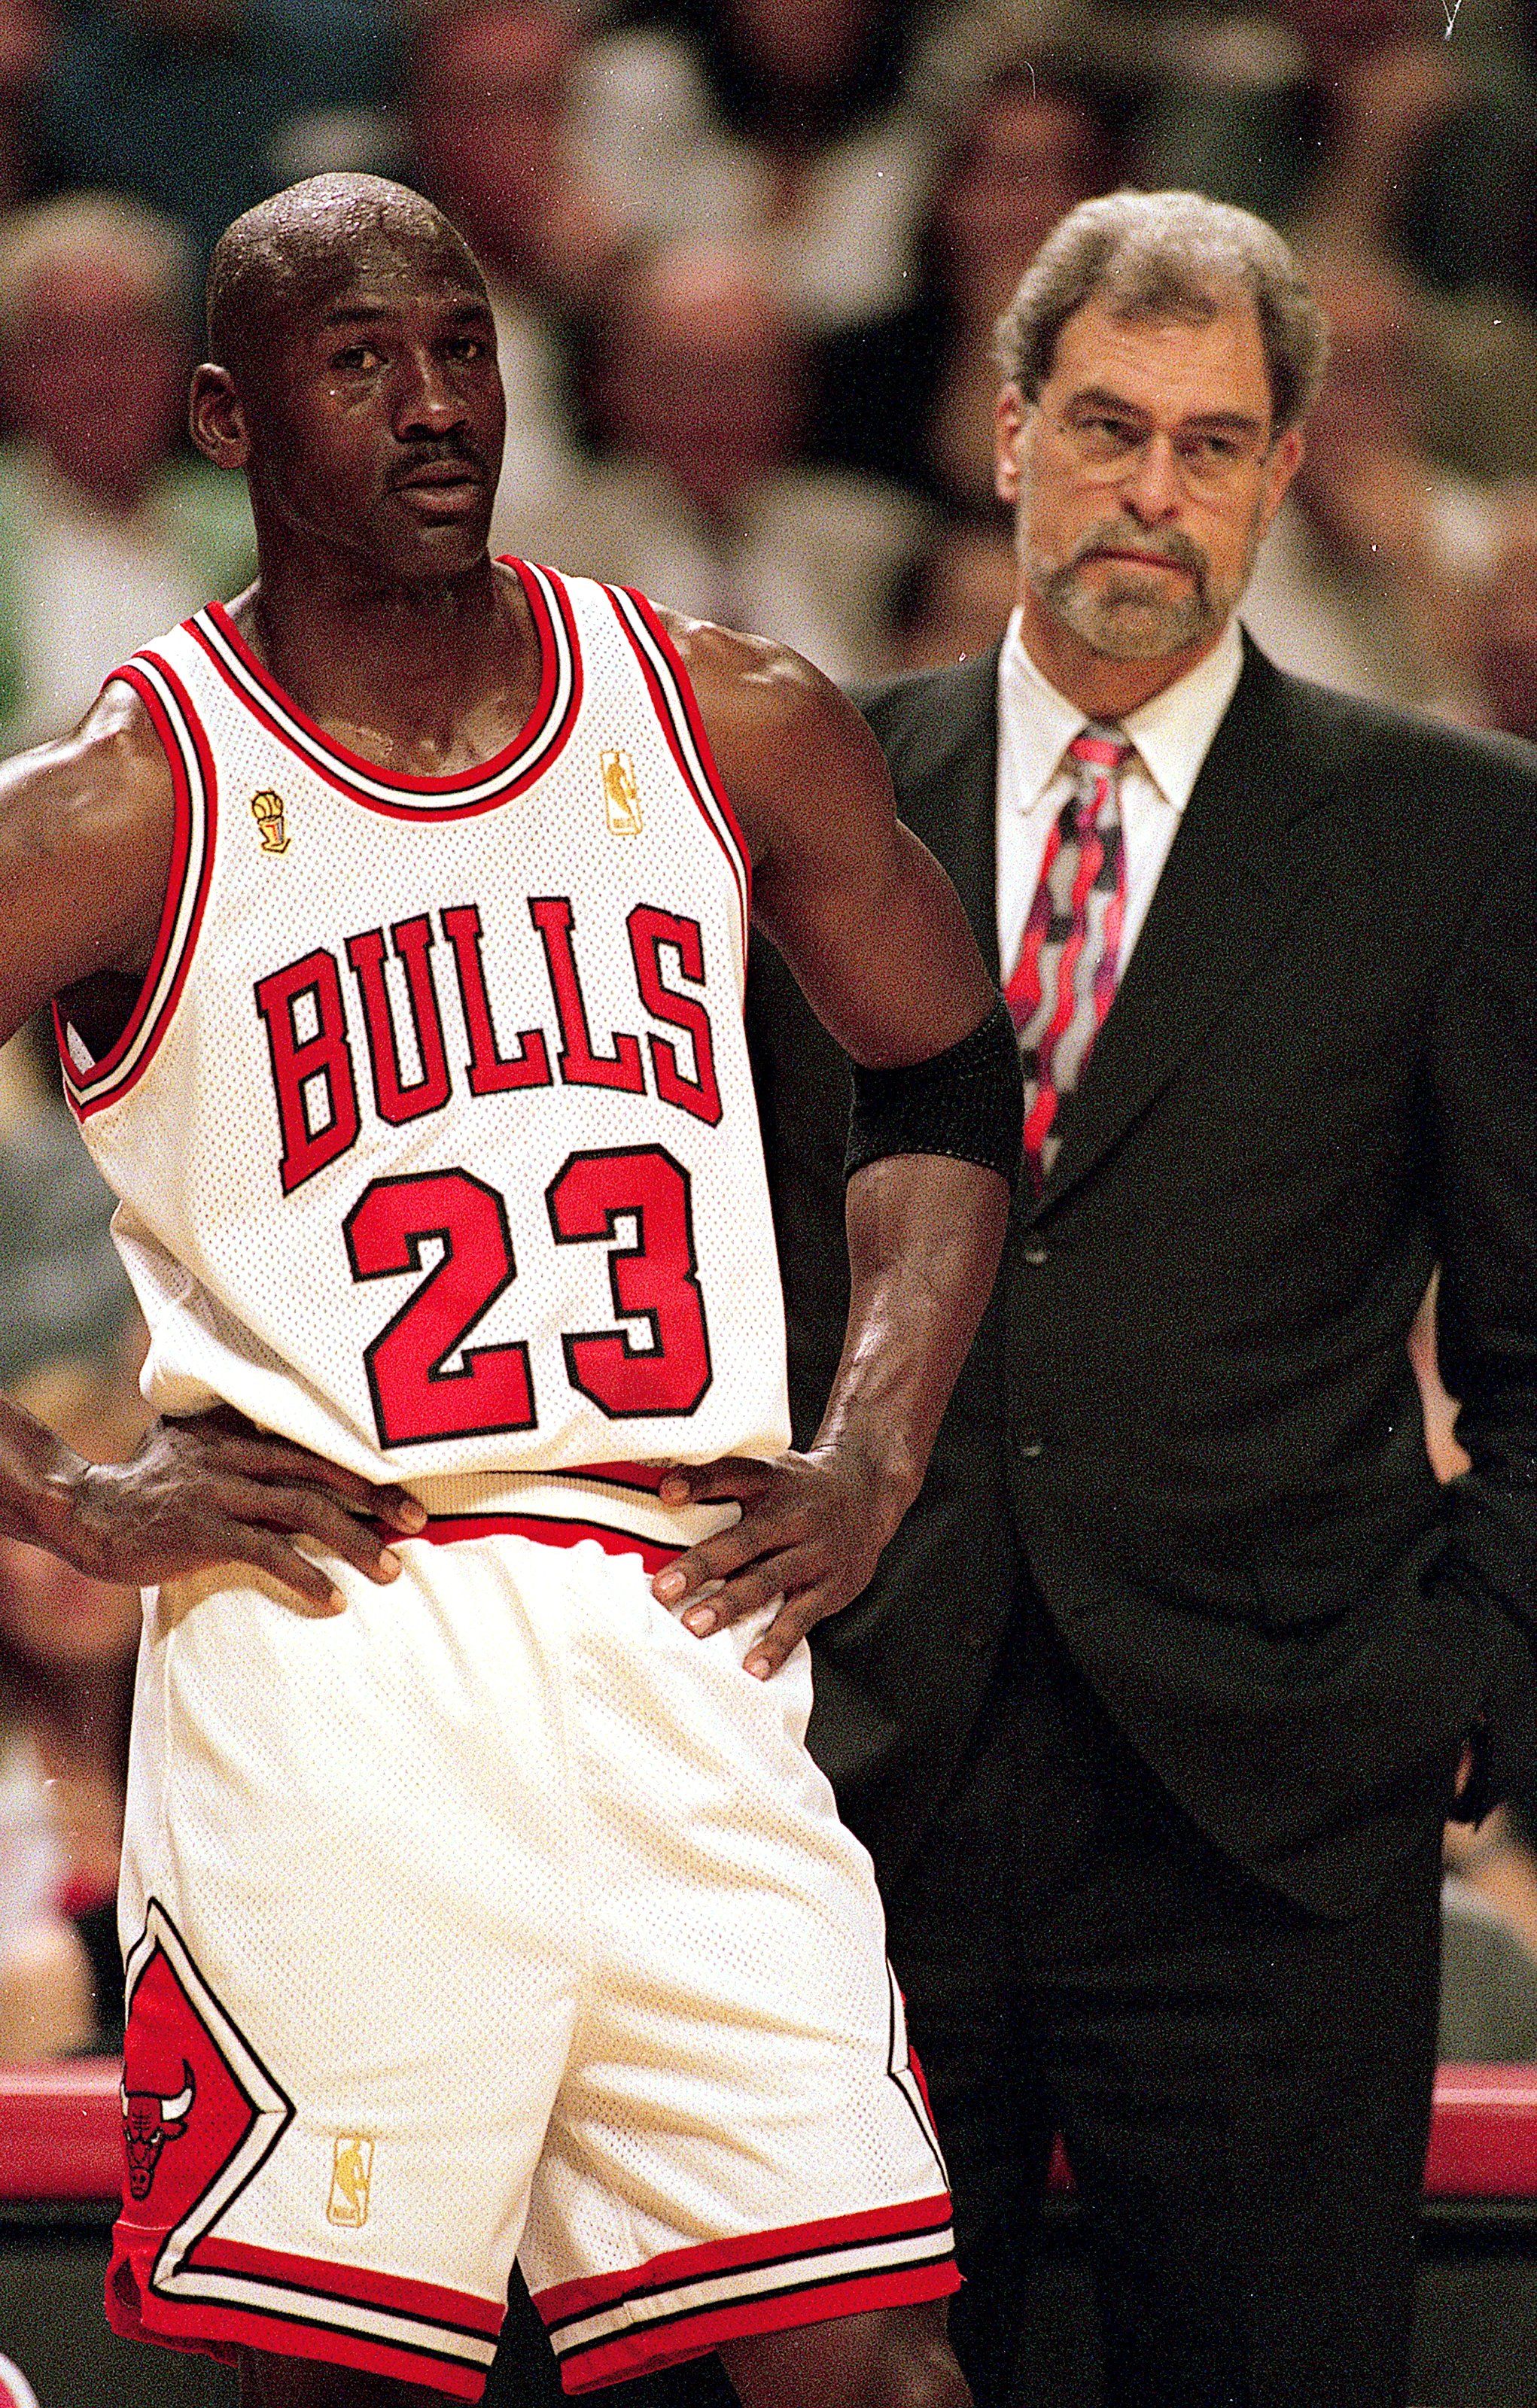 Michael Jordan with coach Phil Jackson